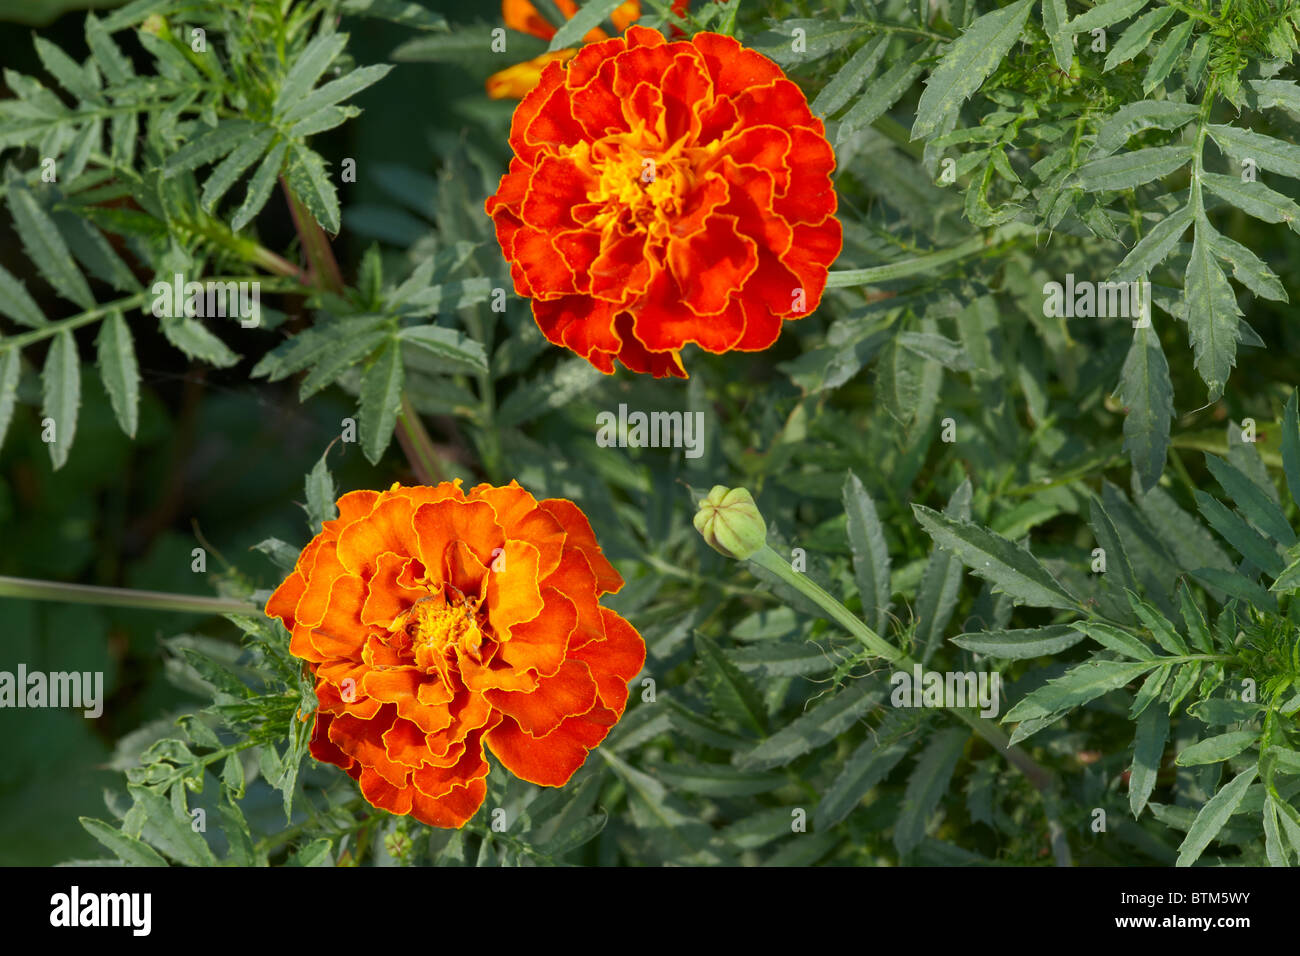 French Marigold. Scientific name: Tagetes patula. Stock Photo